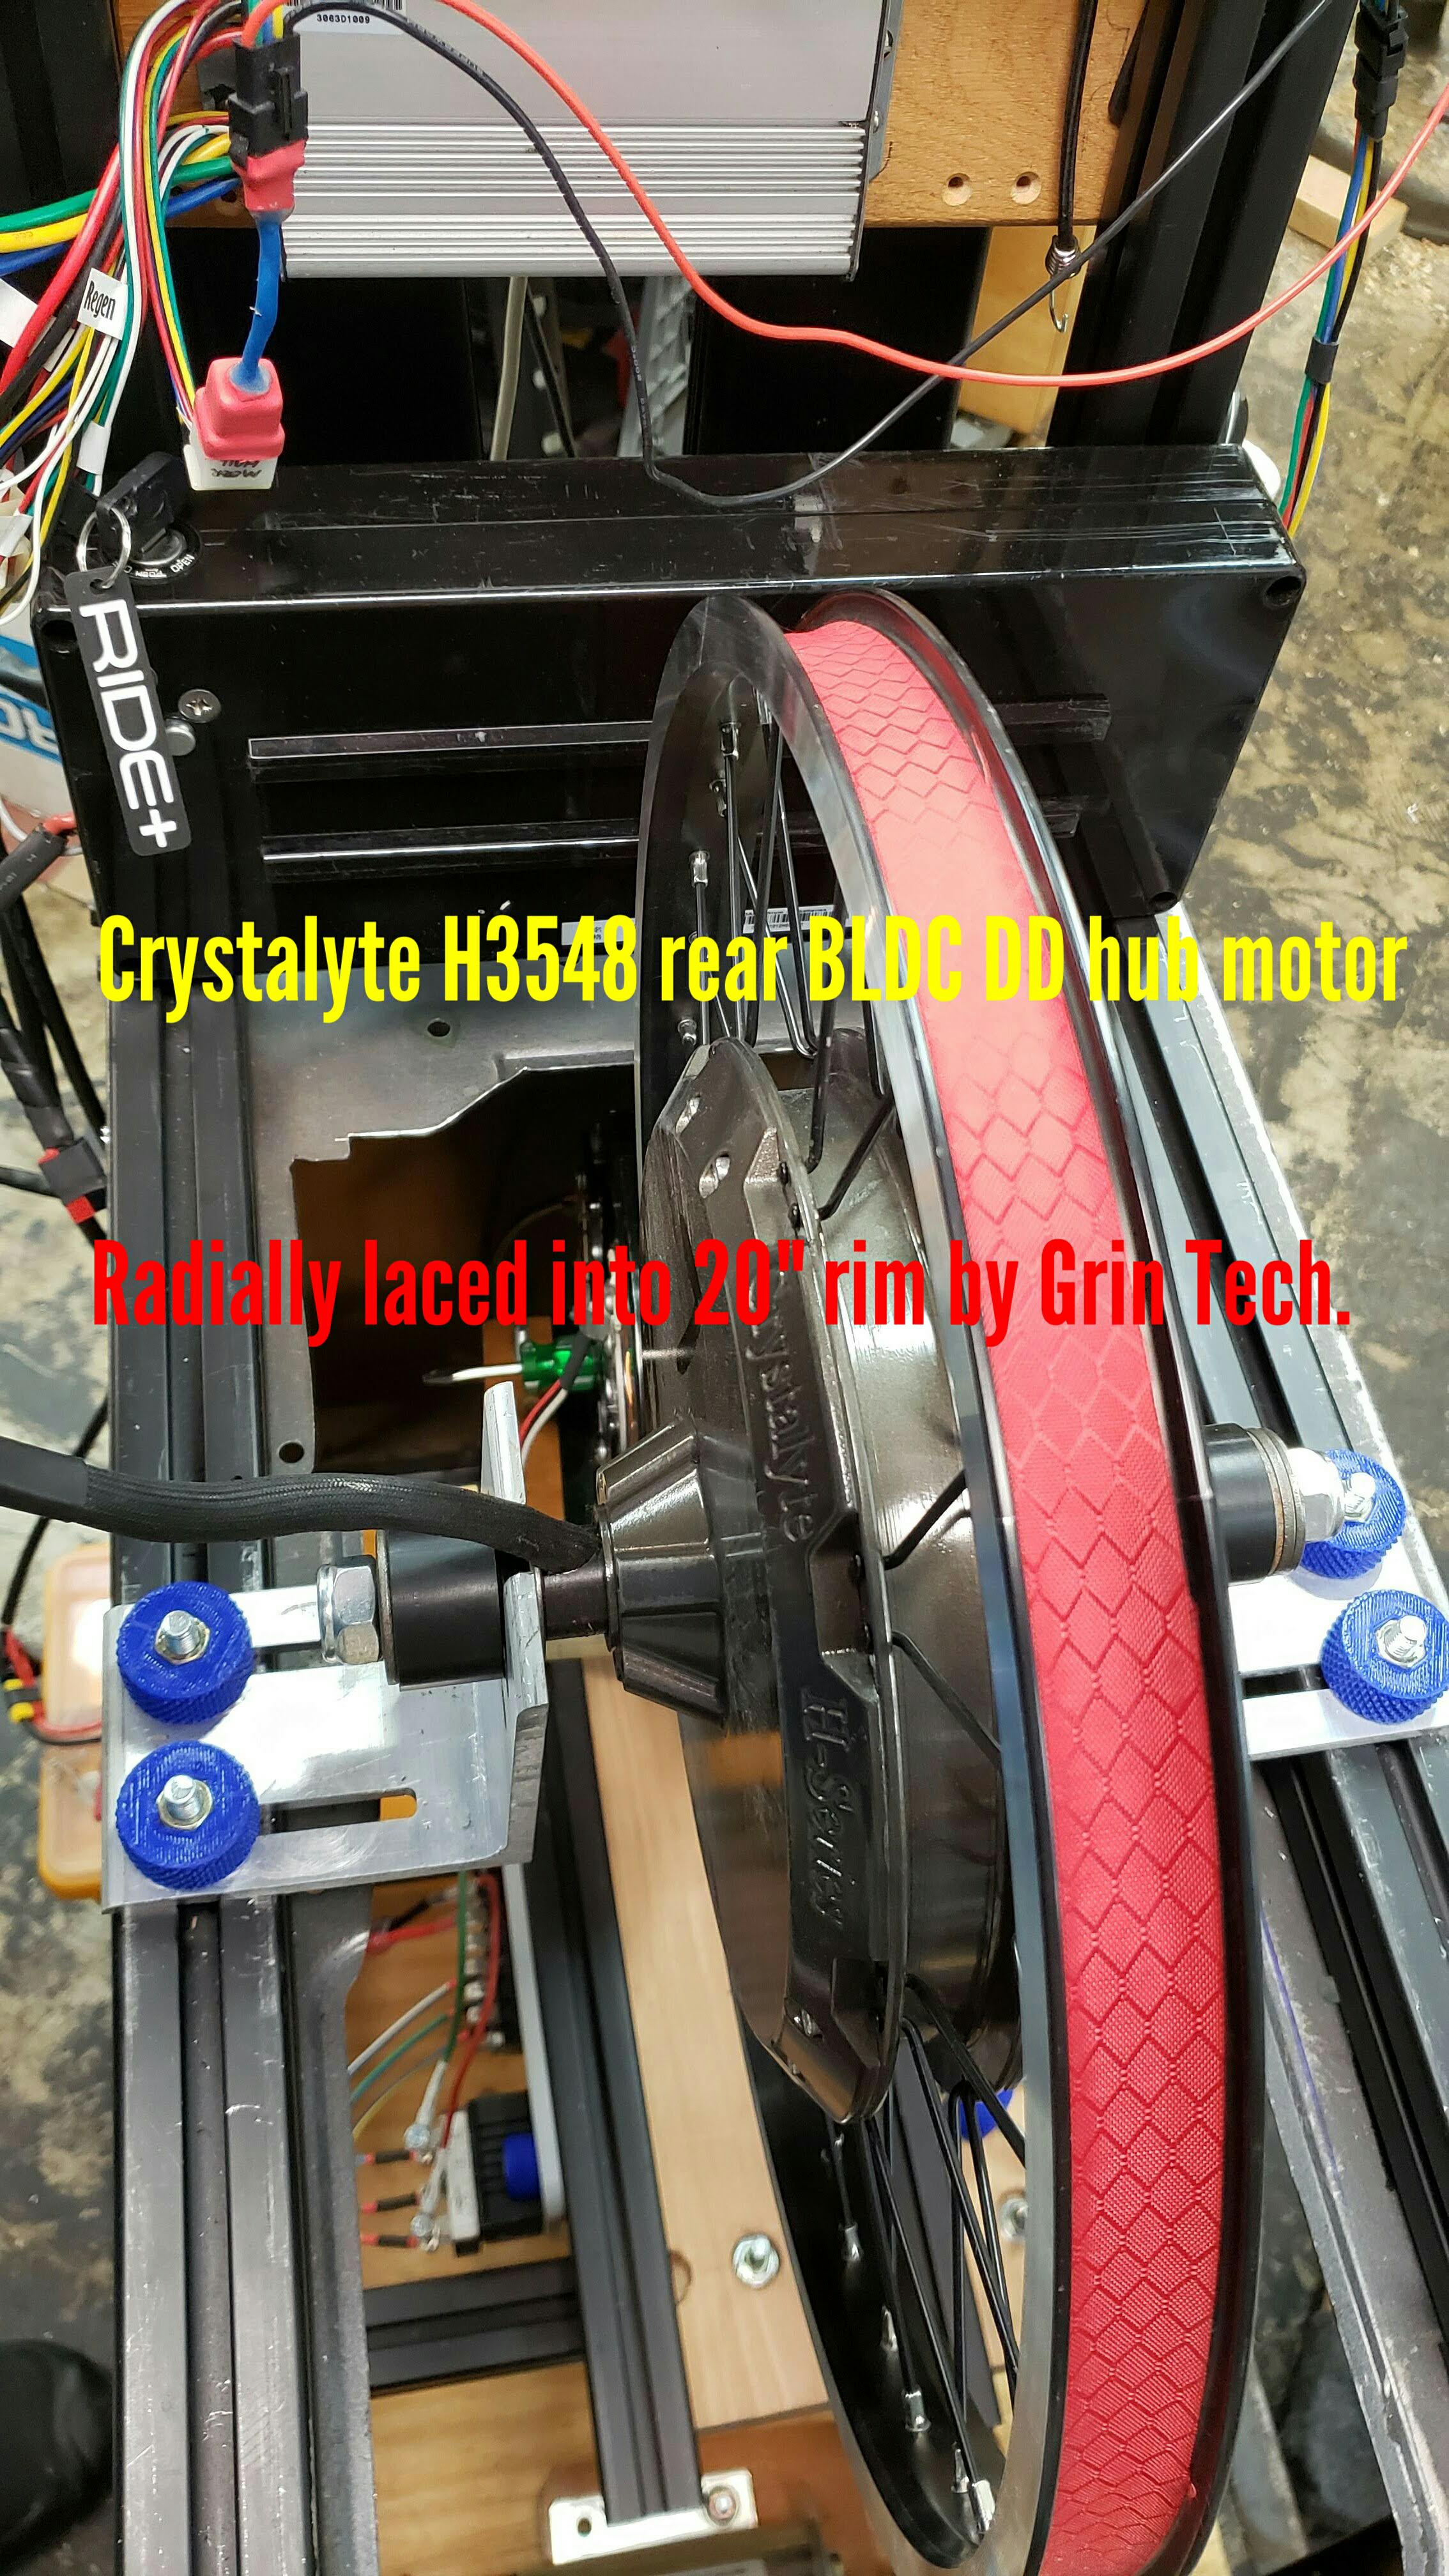 photo of Crystalyte H3548 rear hubmotor